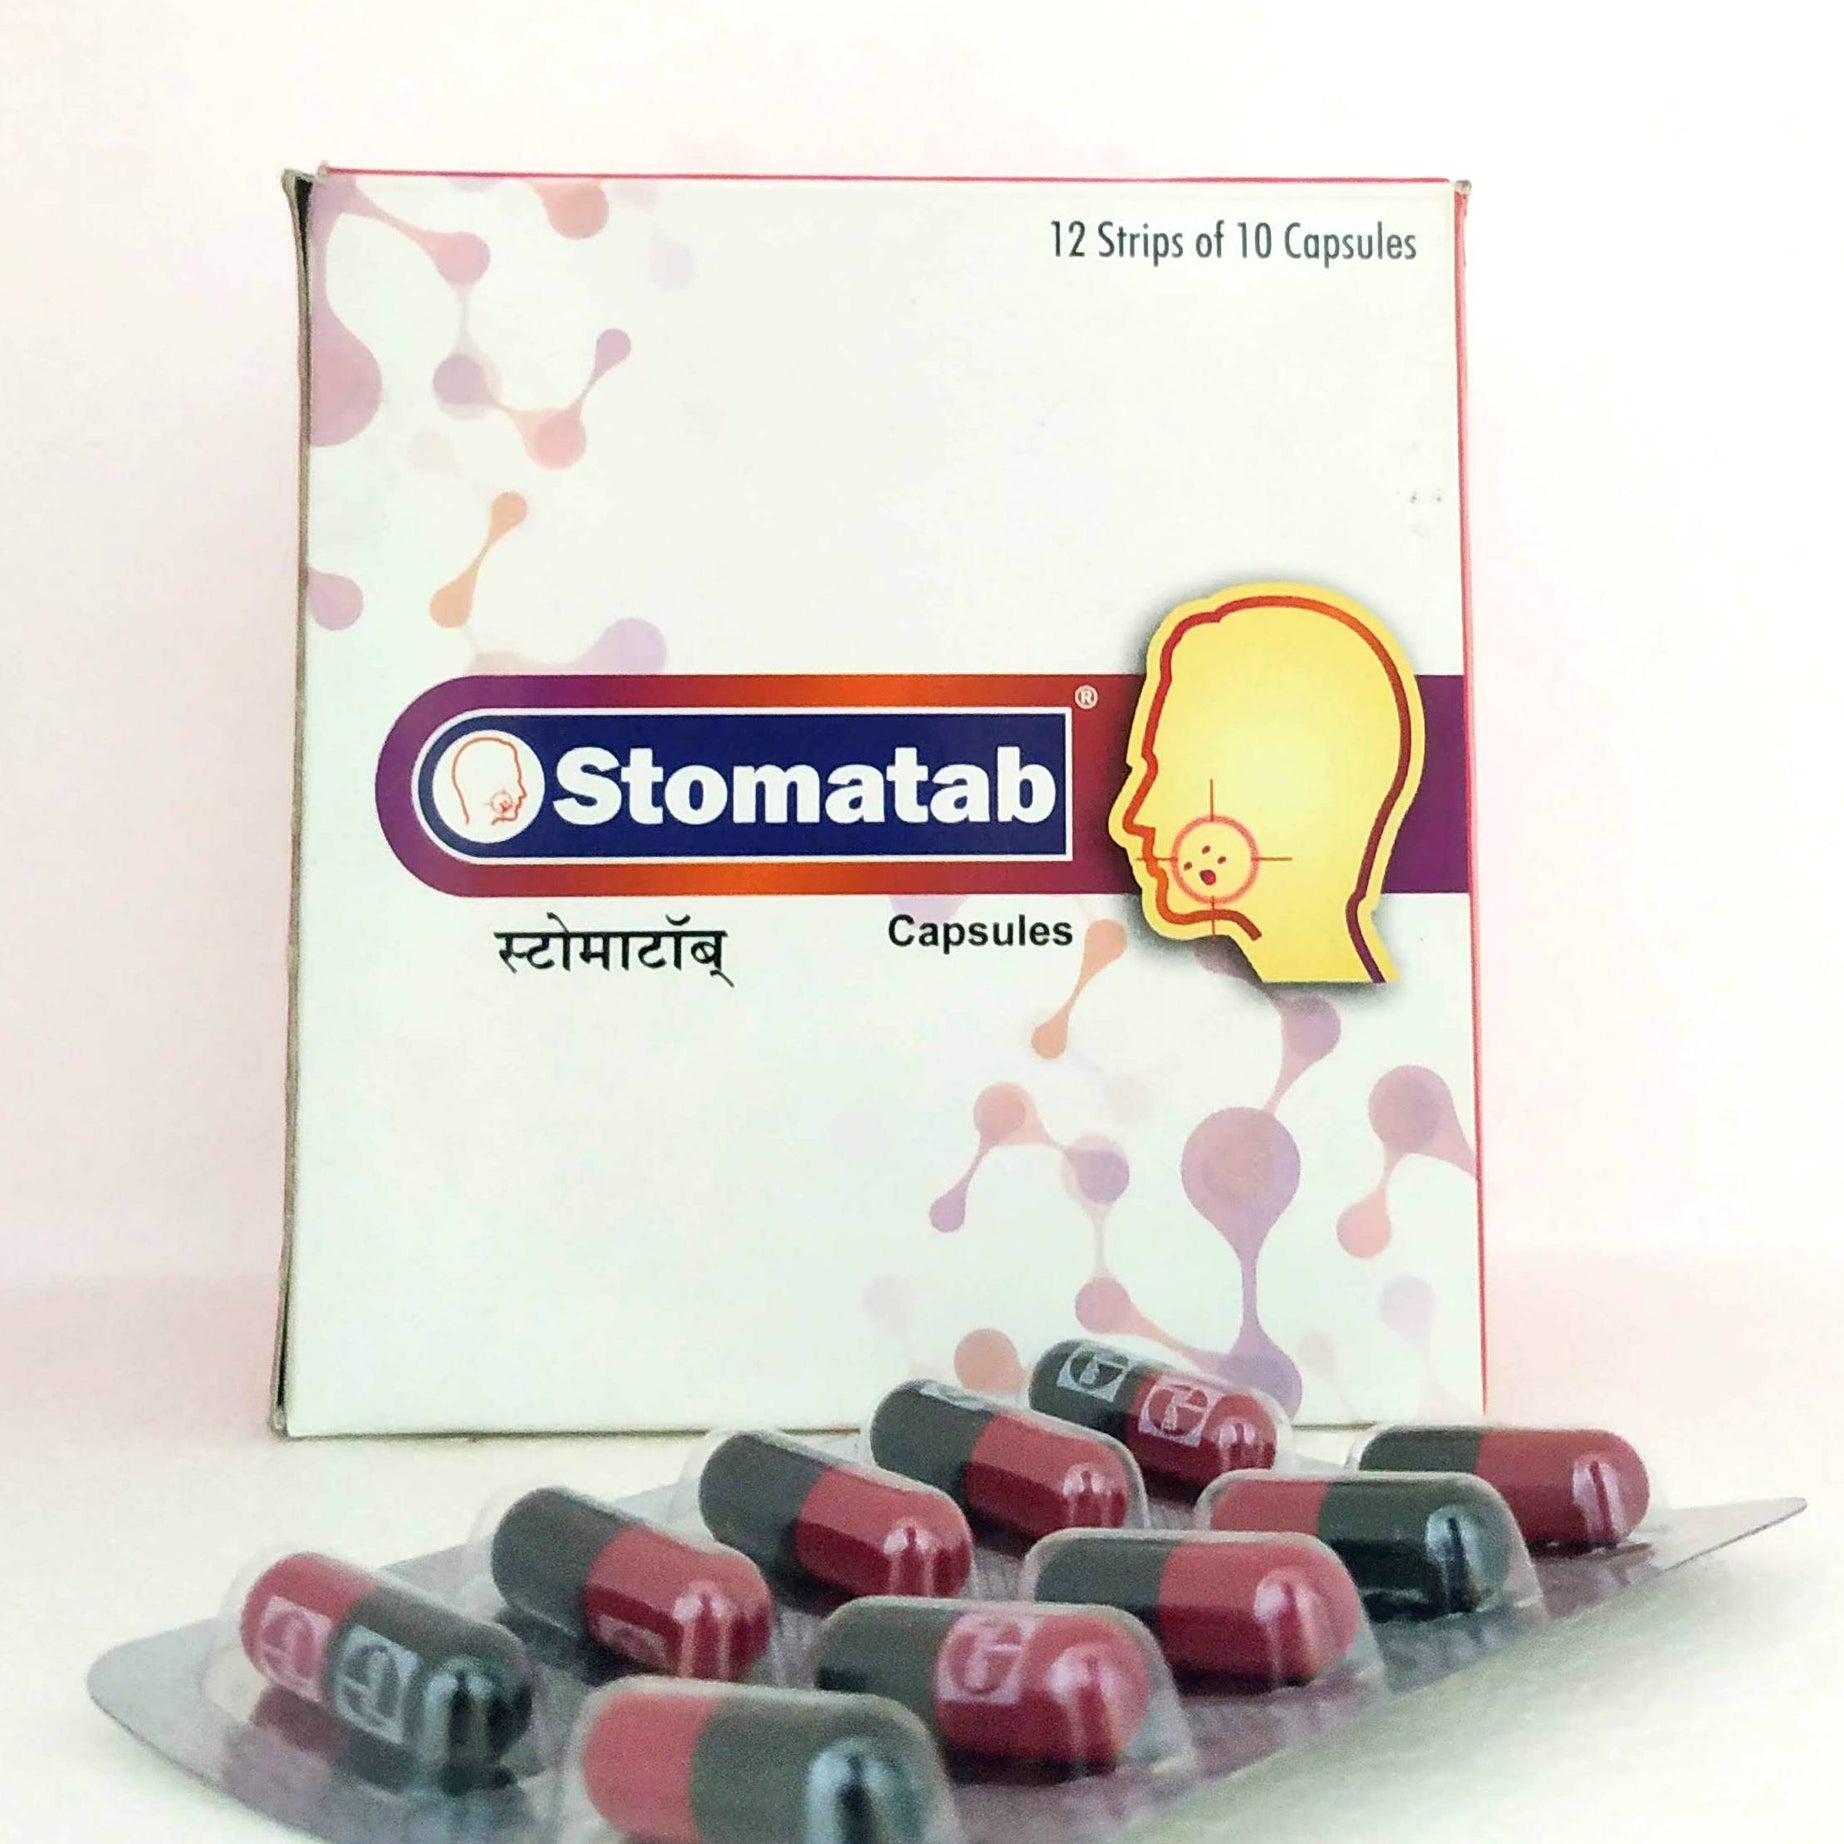 Shop Stomatab capsules - 10capsules at price 50.00 from Sagar Online - Ayush Care